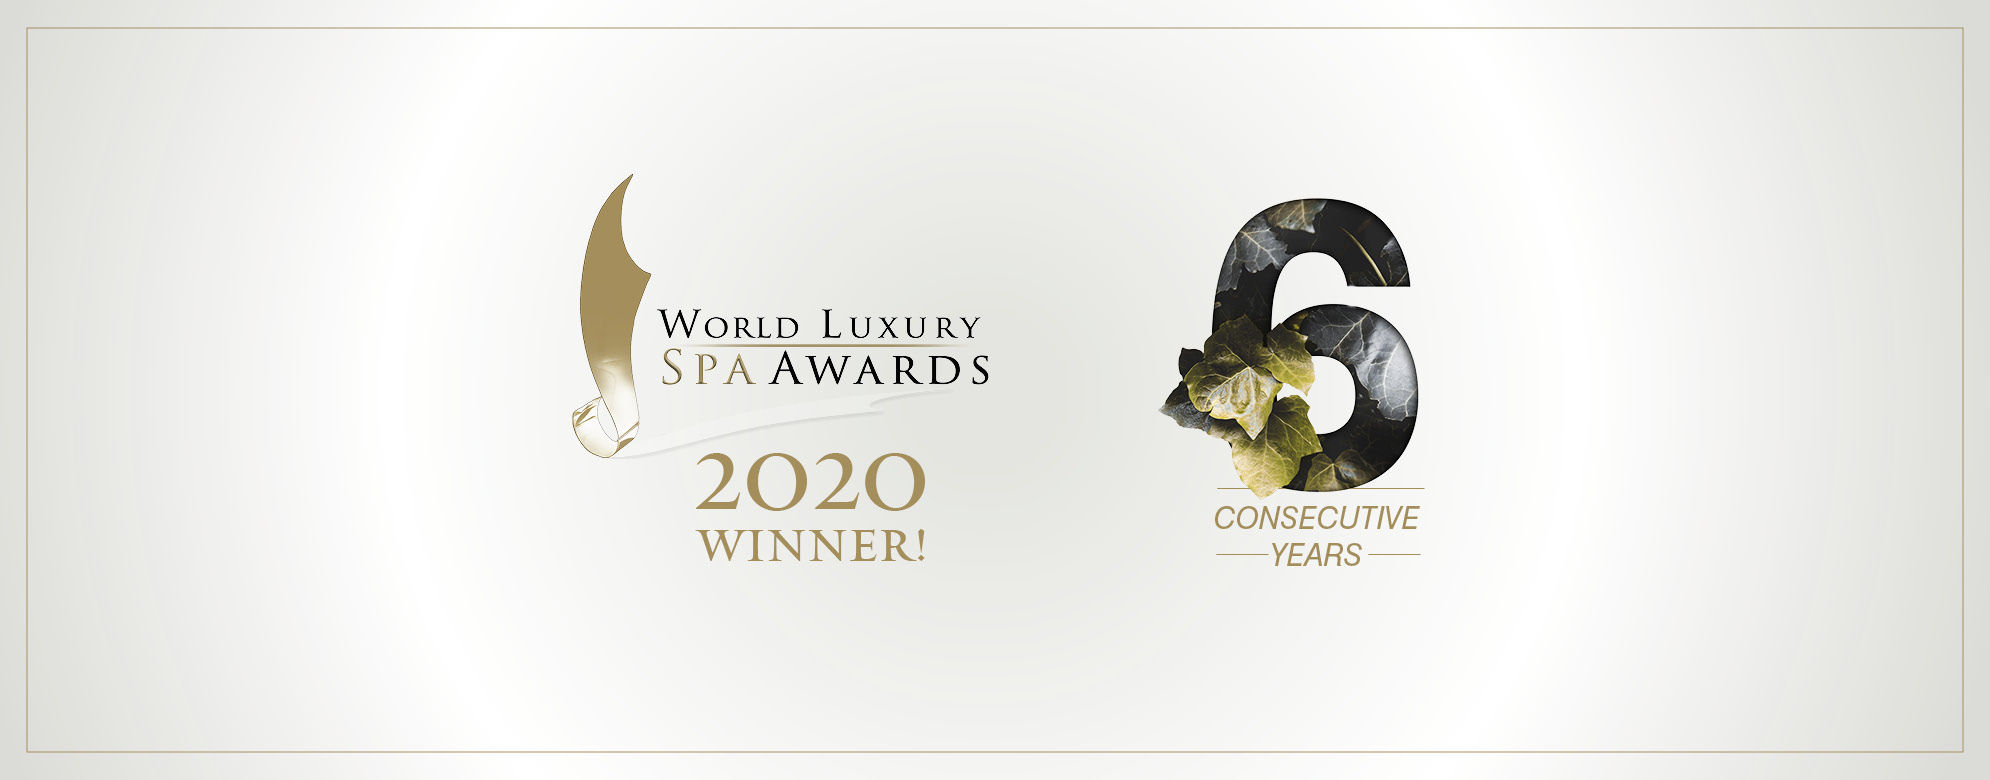 2020 World Luxury Spa Awards Winner